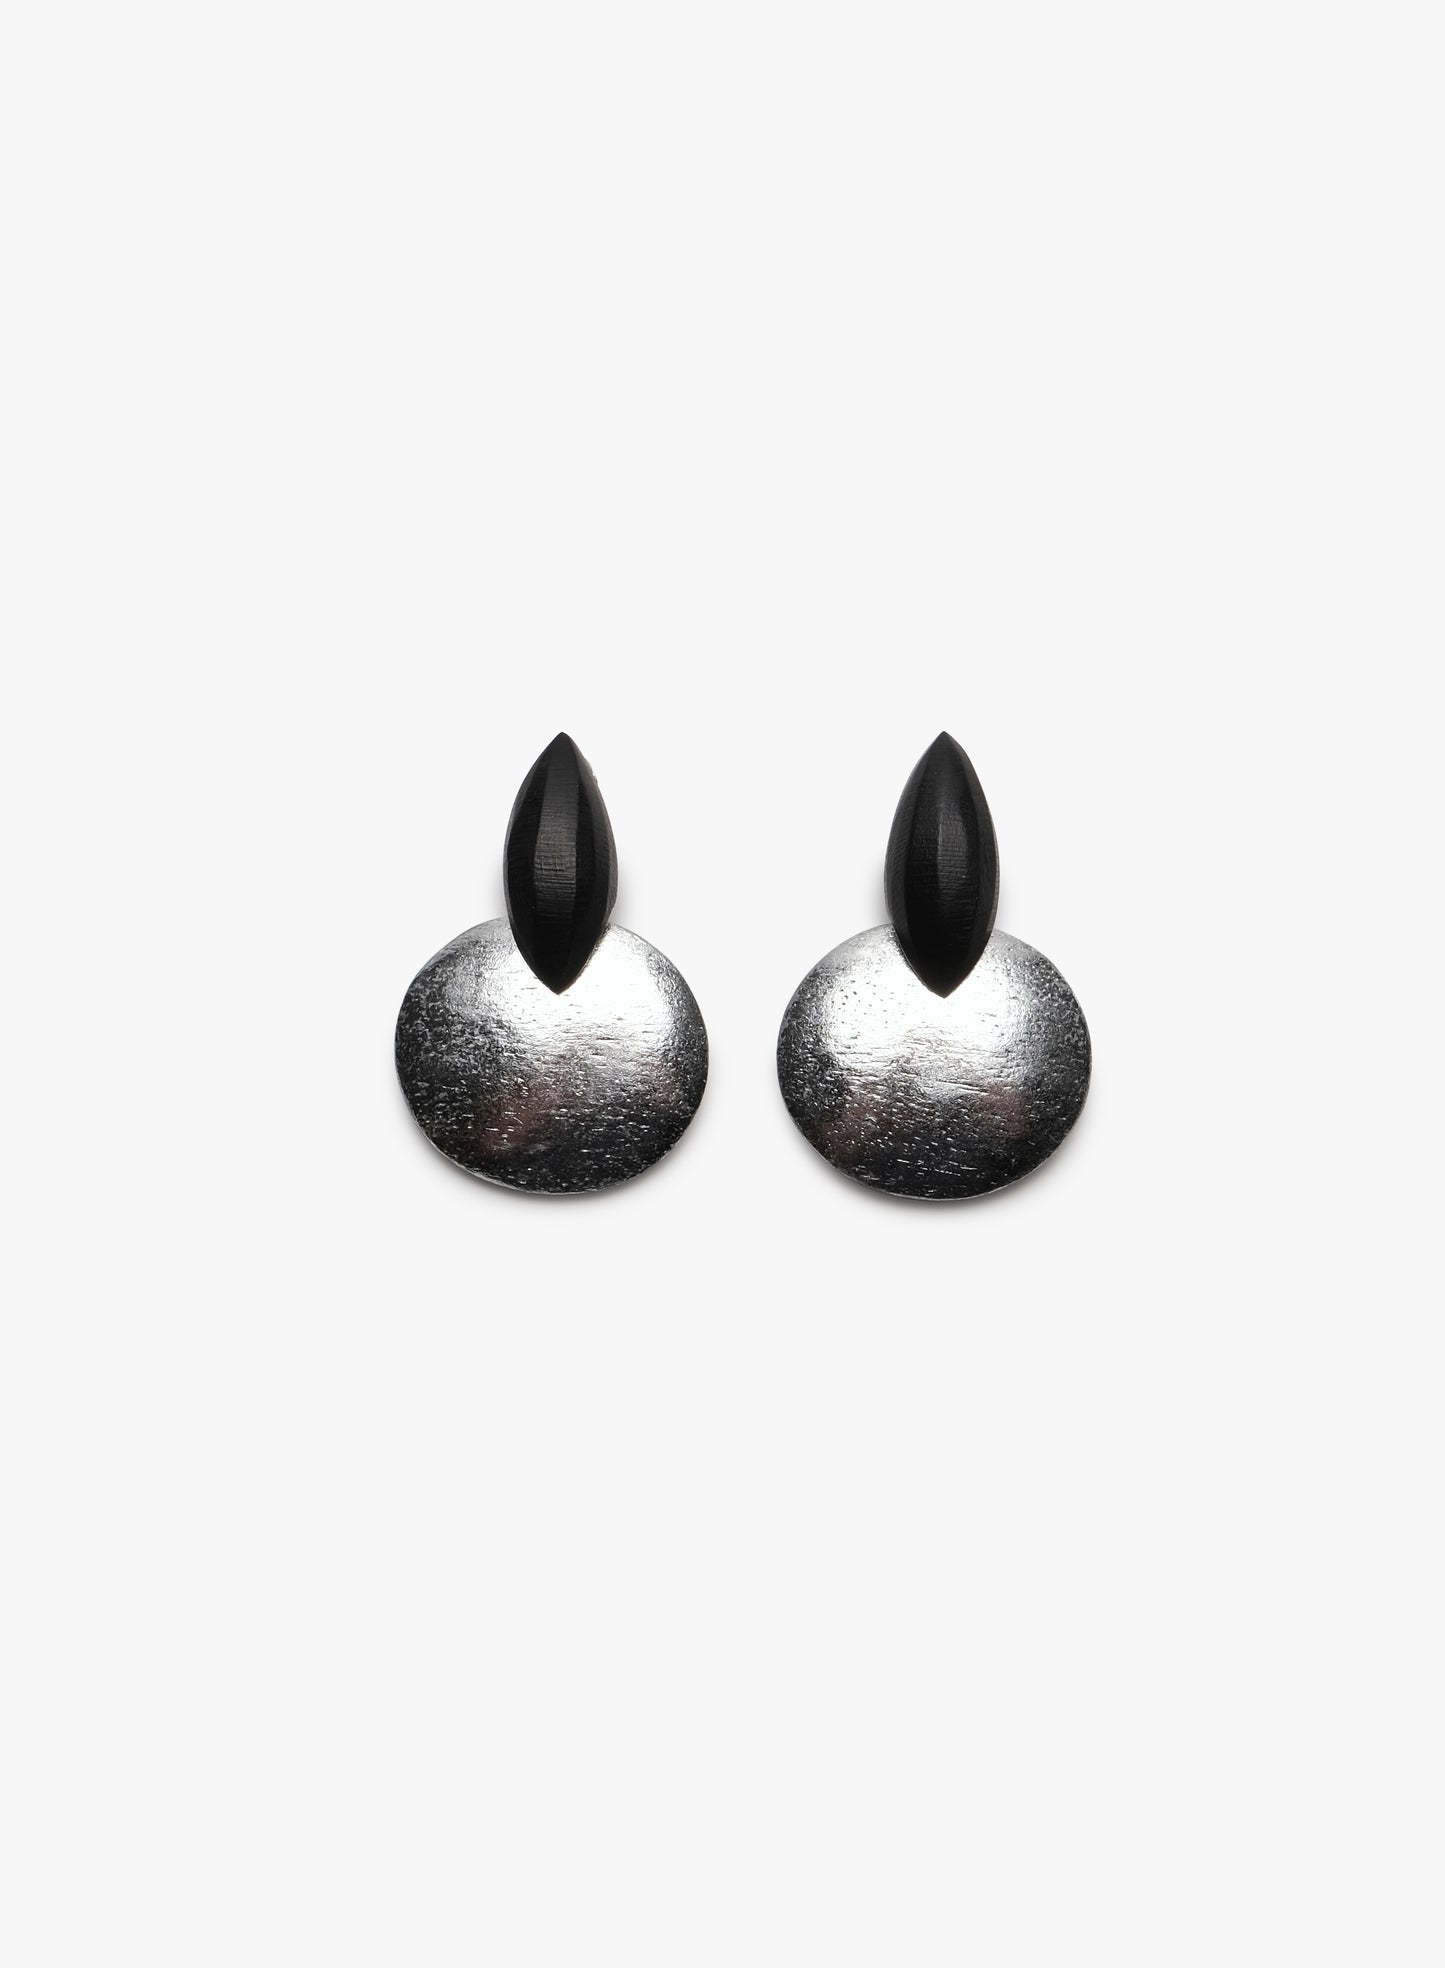 Monies Phasi earring: Acacia, silver foil